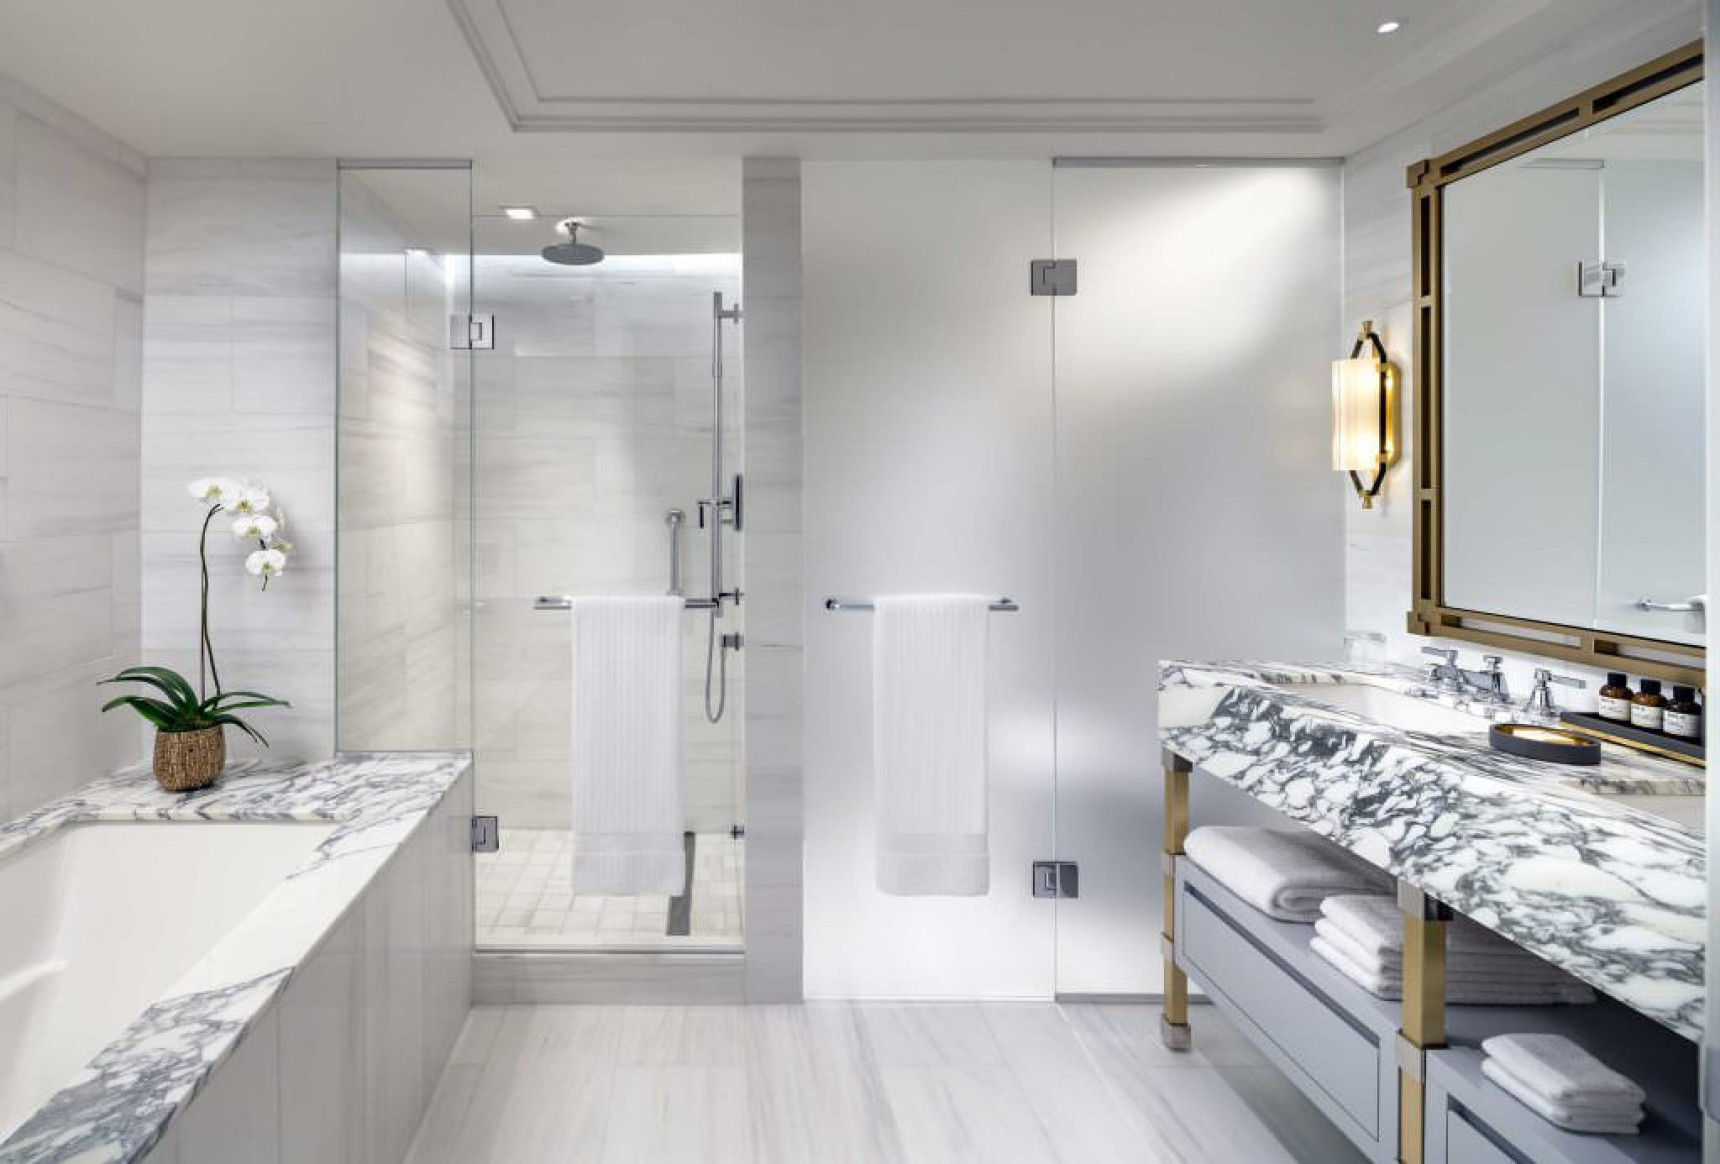 fairmont/fairmont-royal-york-review-bar bathroom